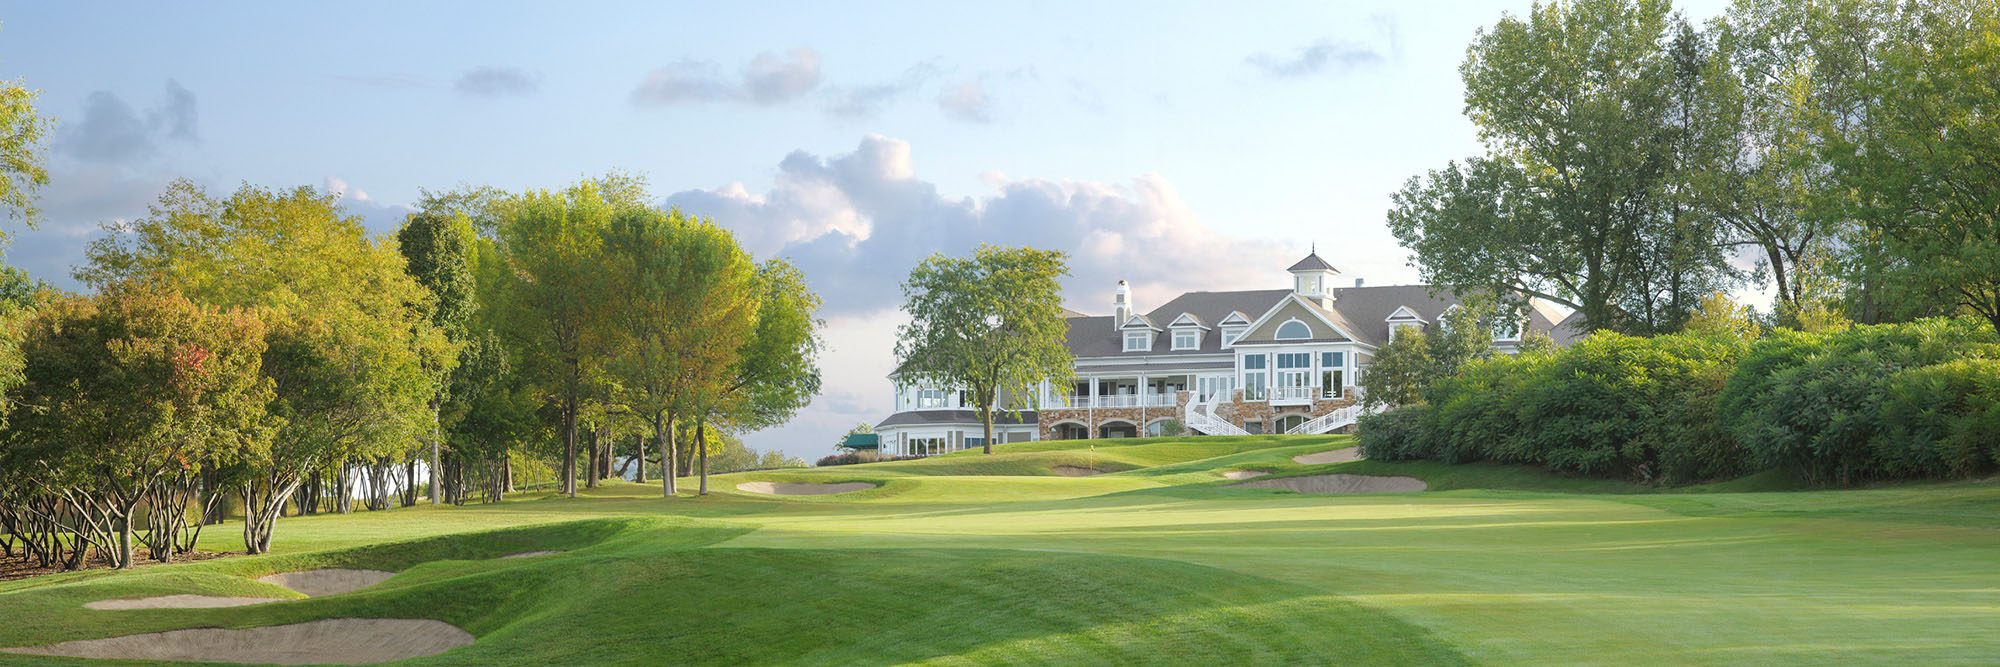 Golf Course Image - Glen Oaks No. 18